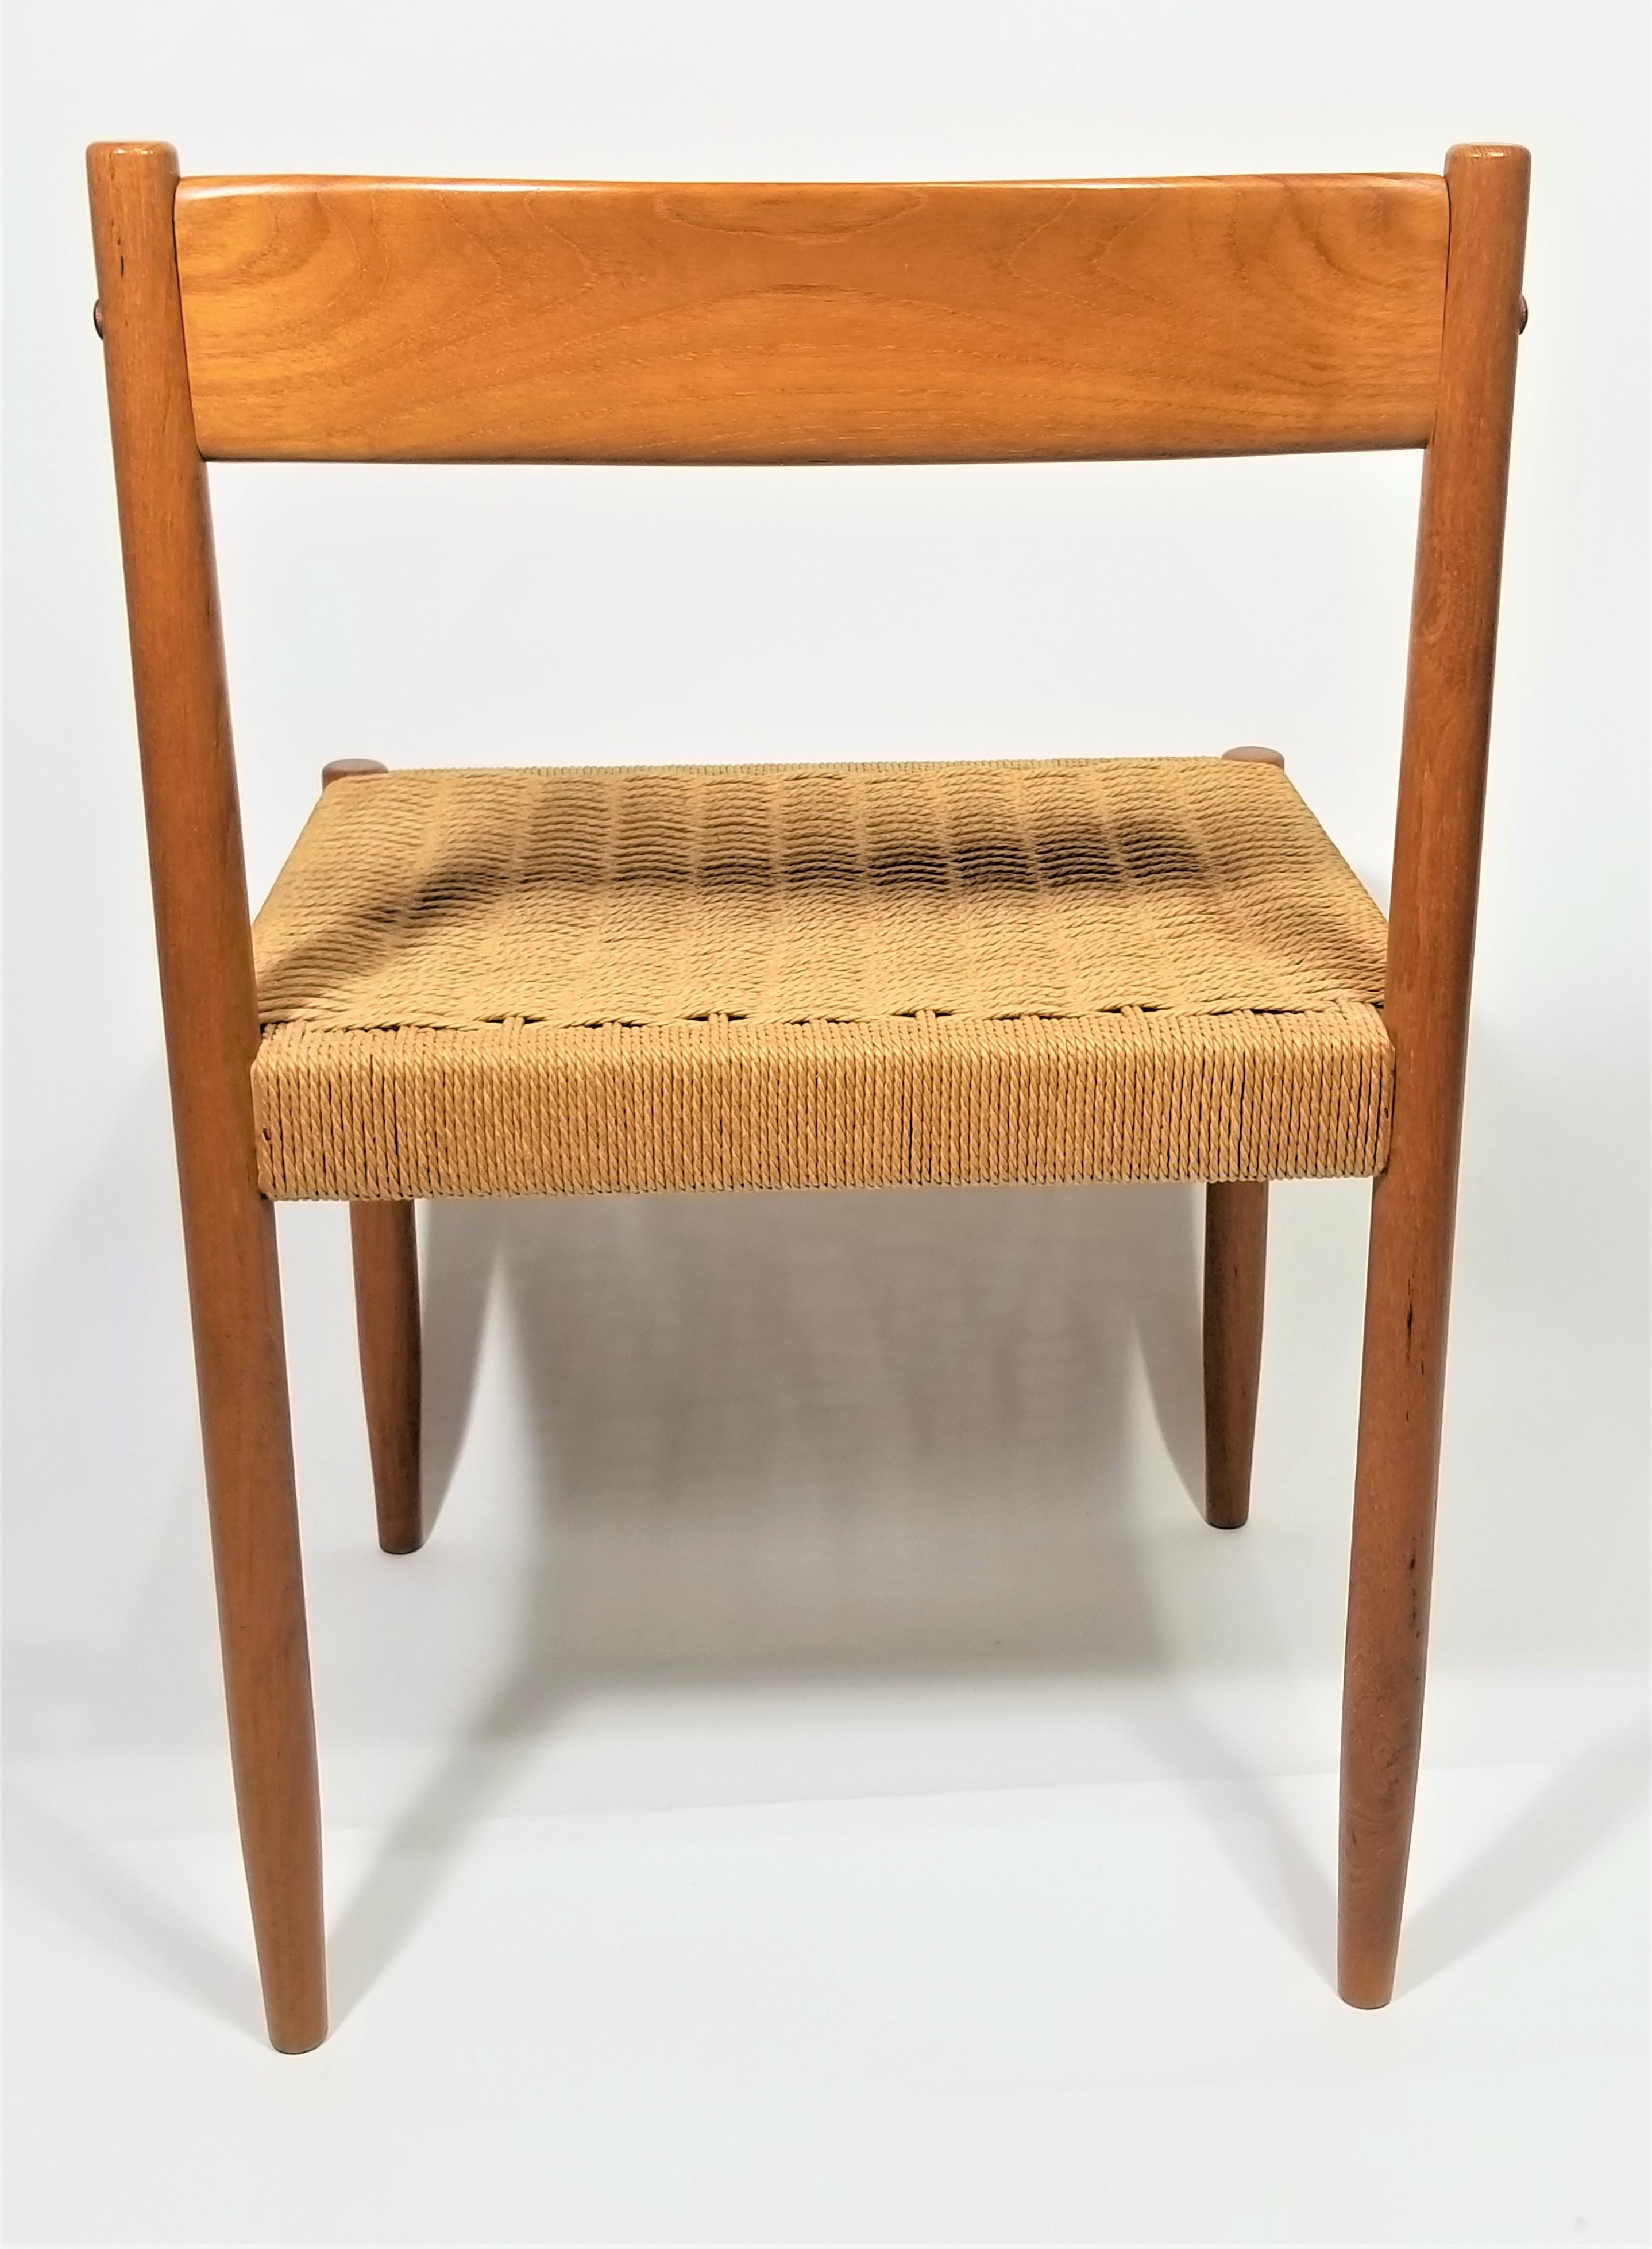 Poul Volther for Frem Rojle Danish Teak Woven Chair Midcentury 1960s  For Sale 8